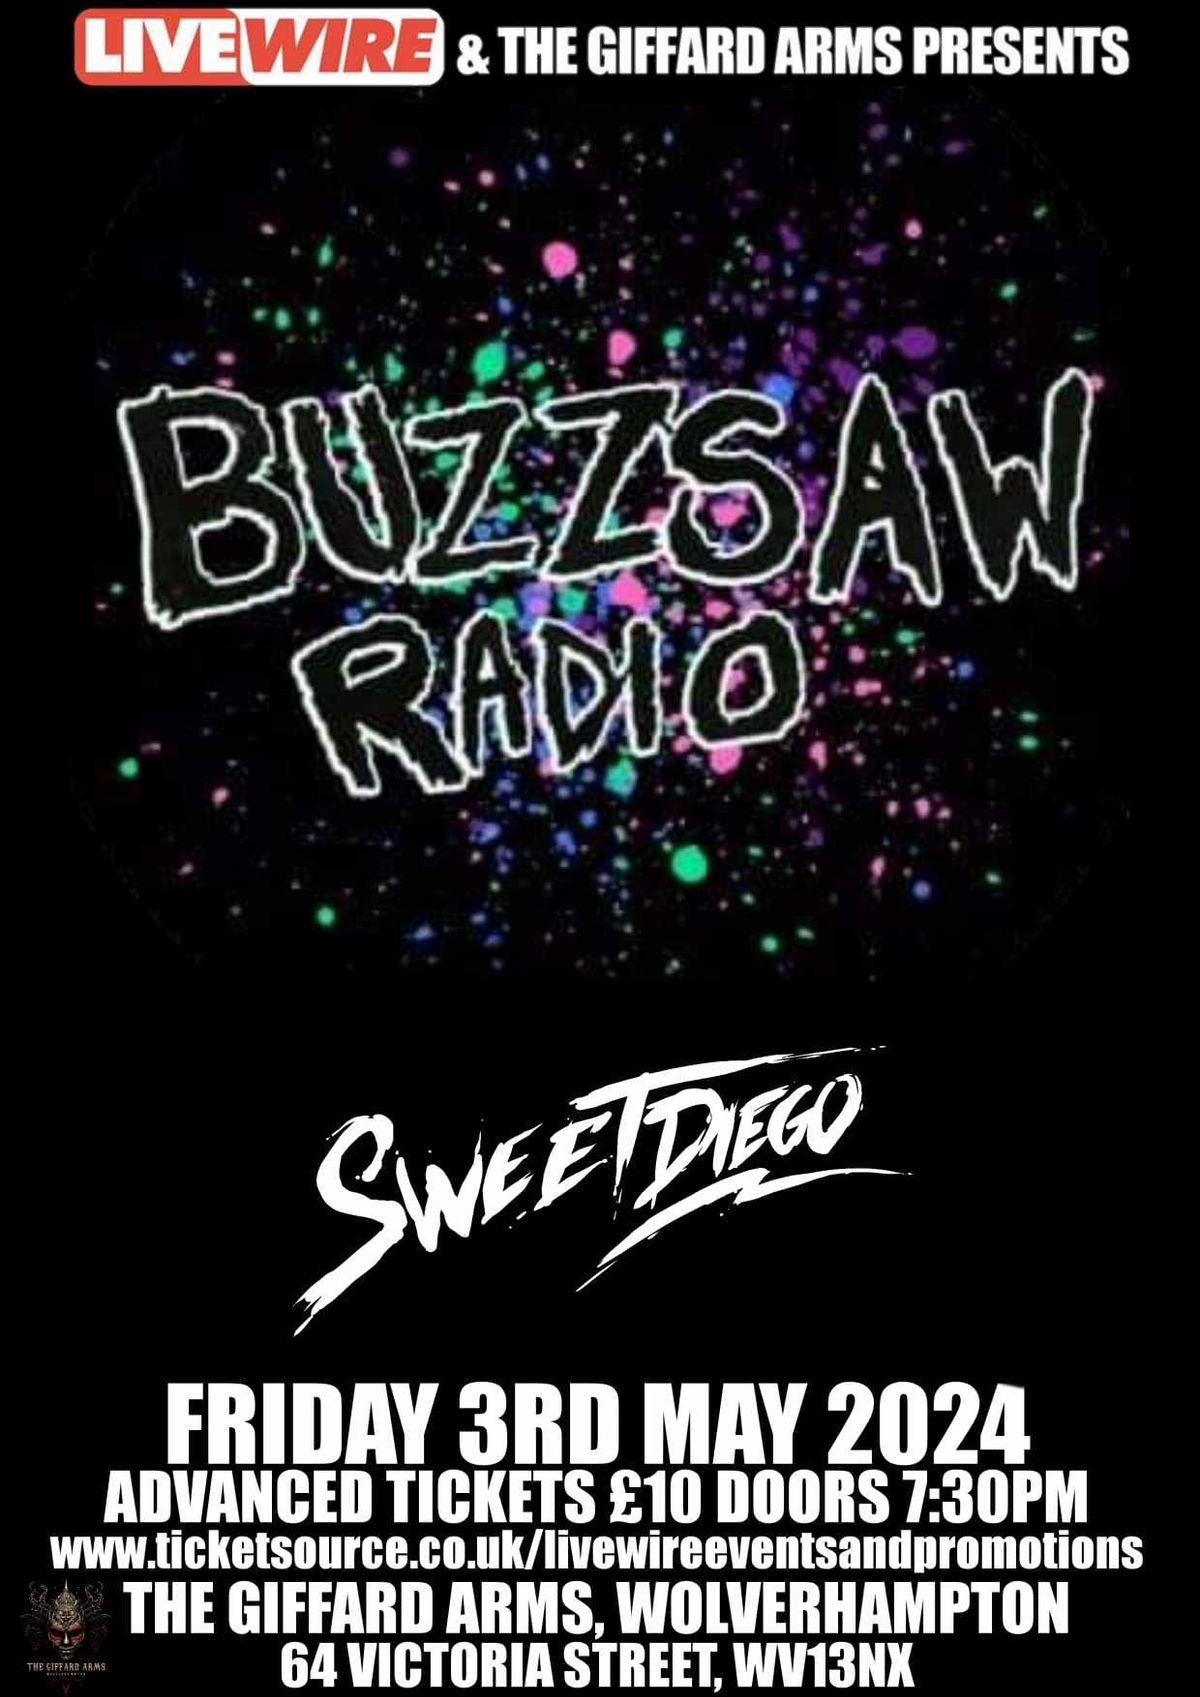 LiveWire presents Buzzsaw Radio 